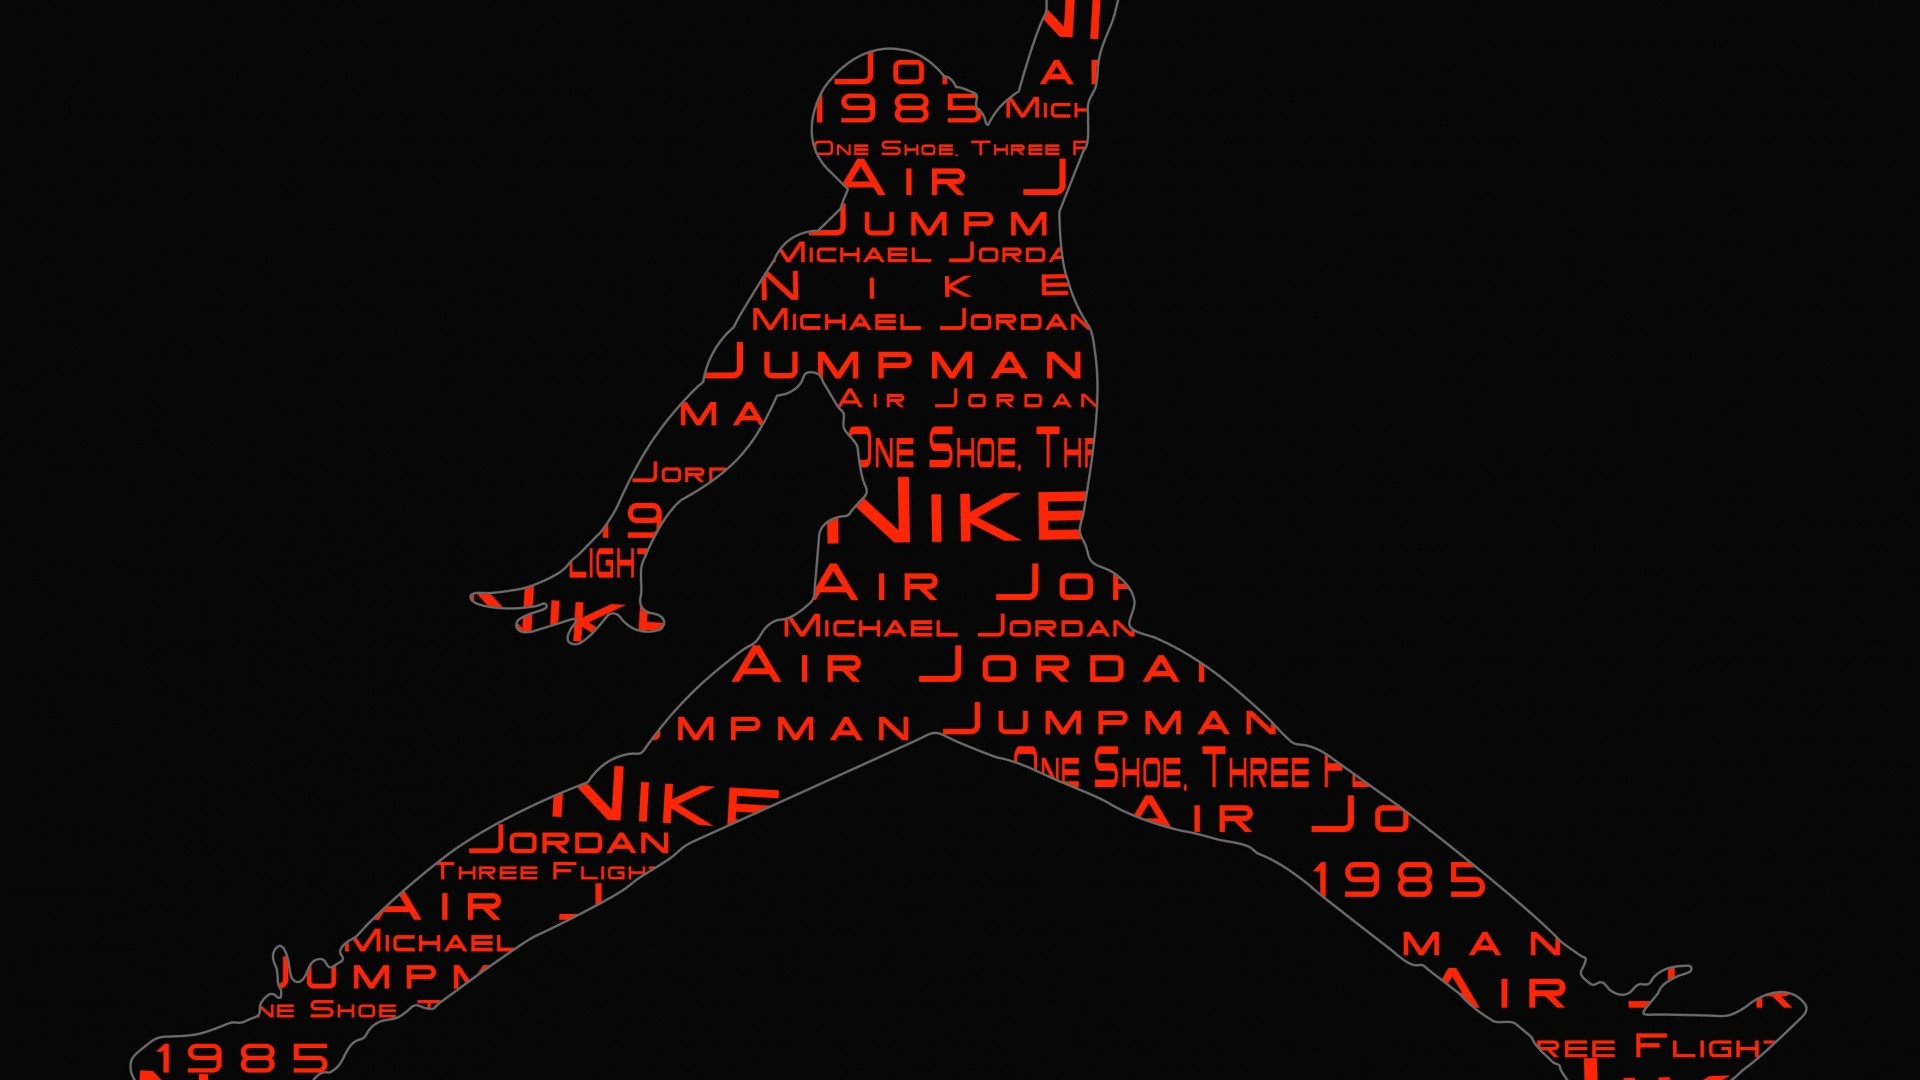 1920x1080 Air Jordan Logo Images TheCelebrityPix 3517x4200. Download resolutions:  Desktop:  ...